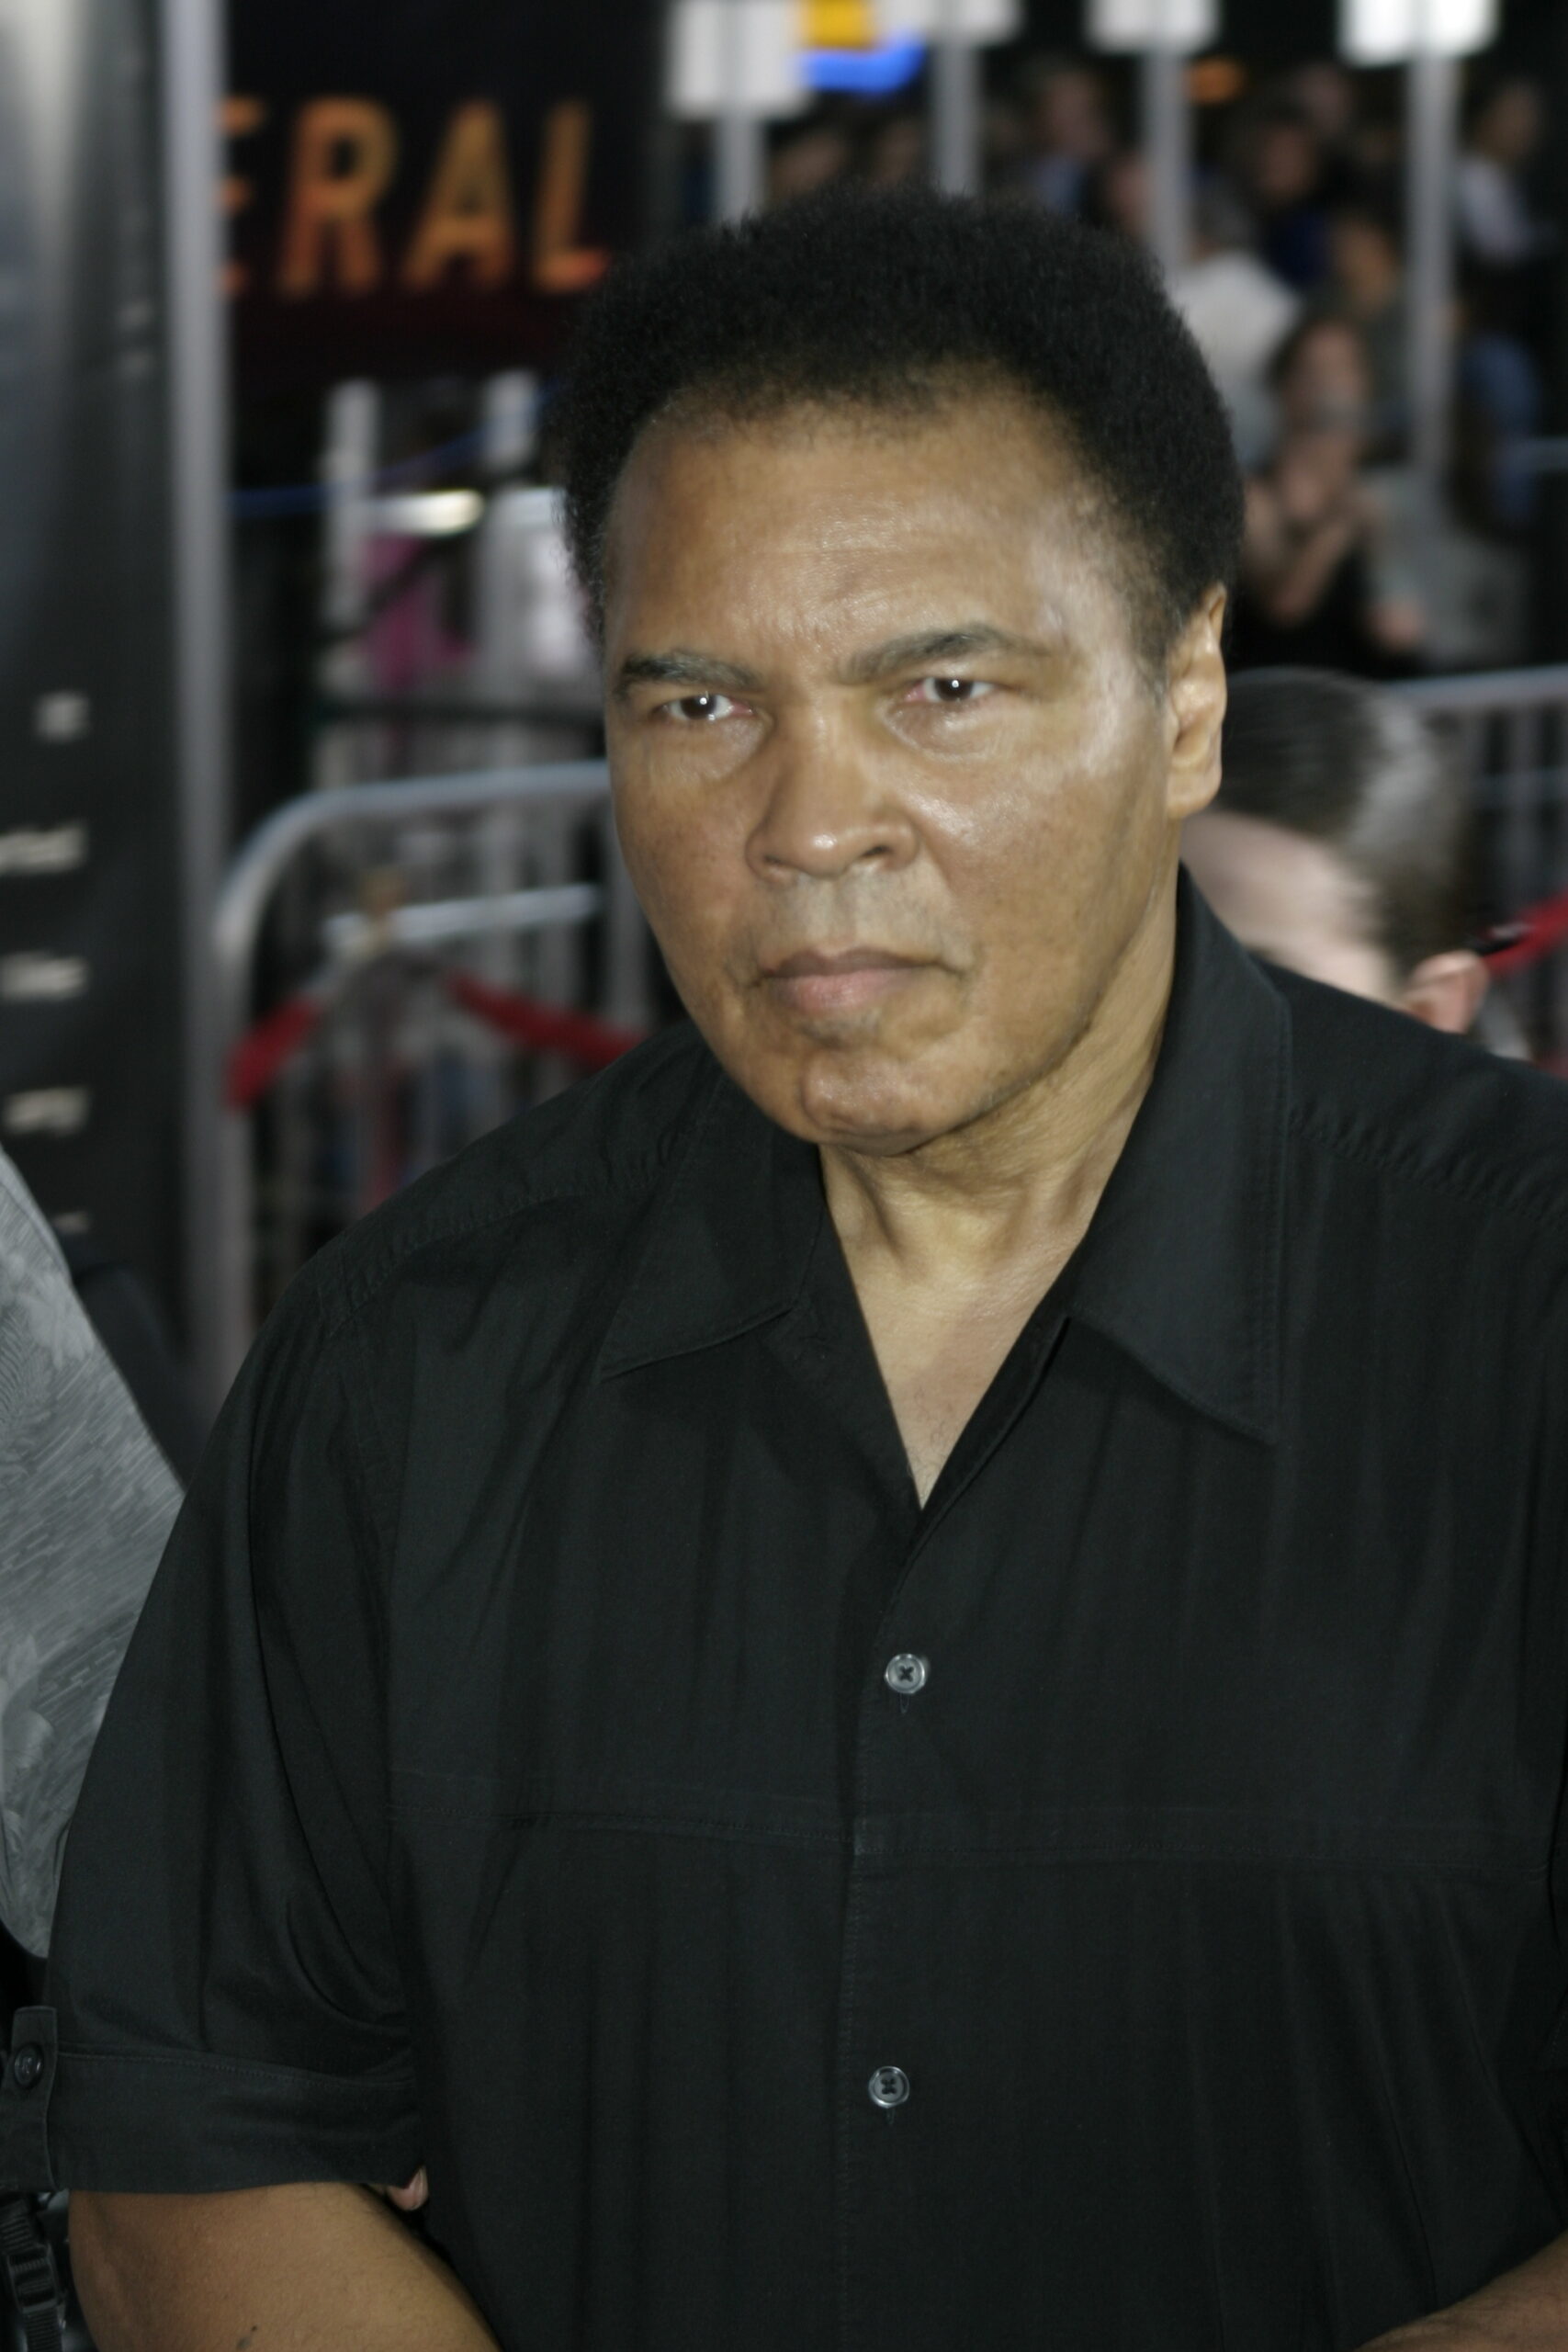 Muhammad Ali dies at age 74